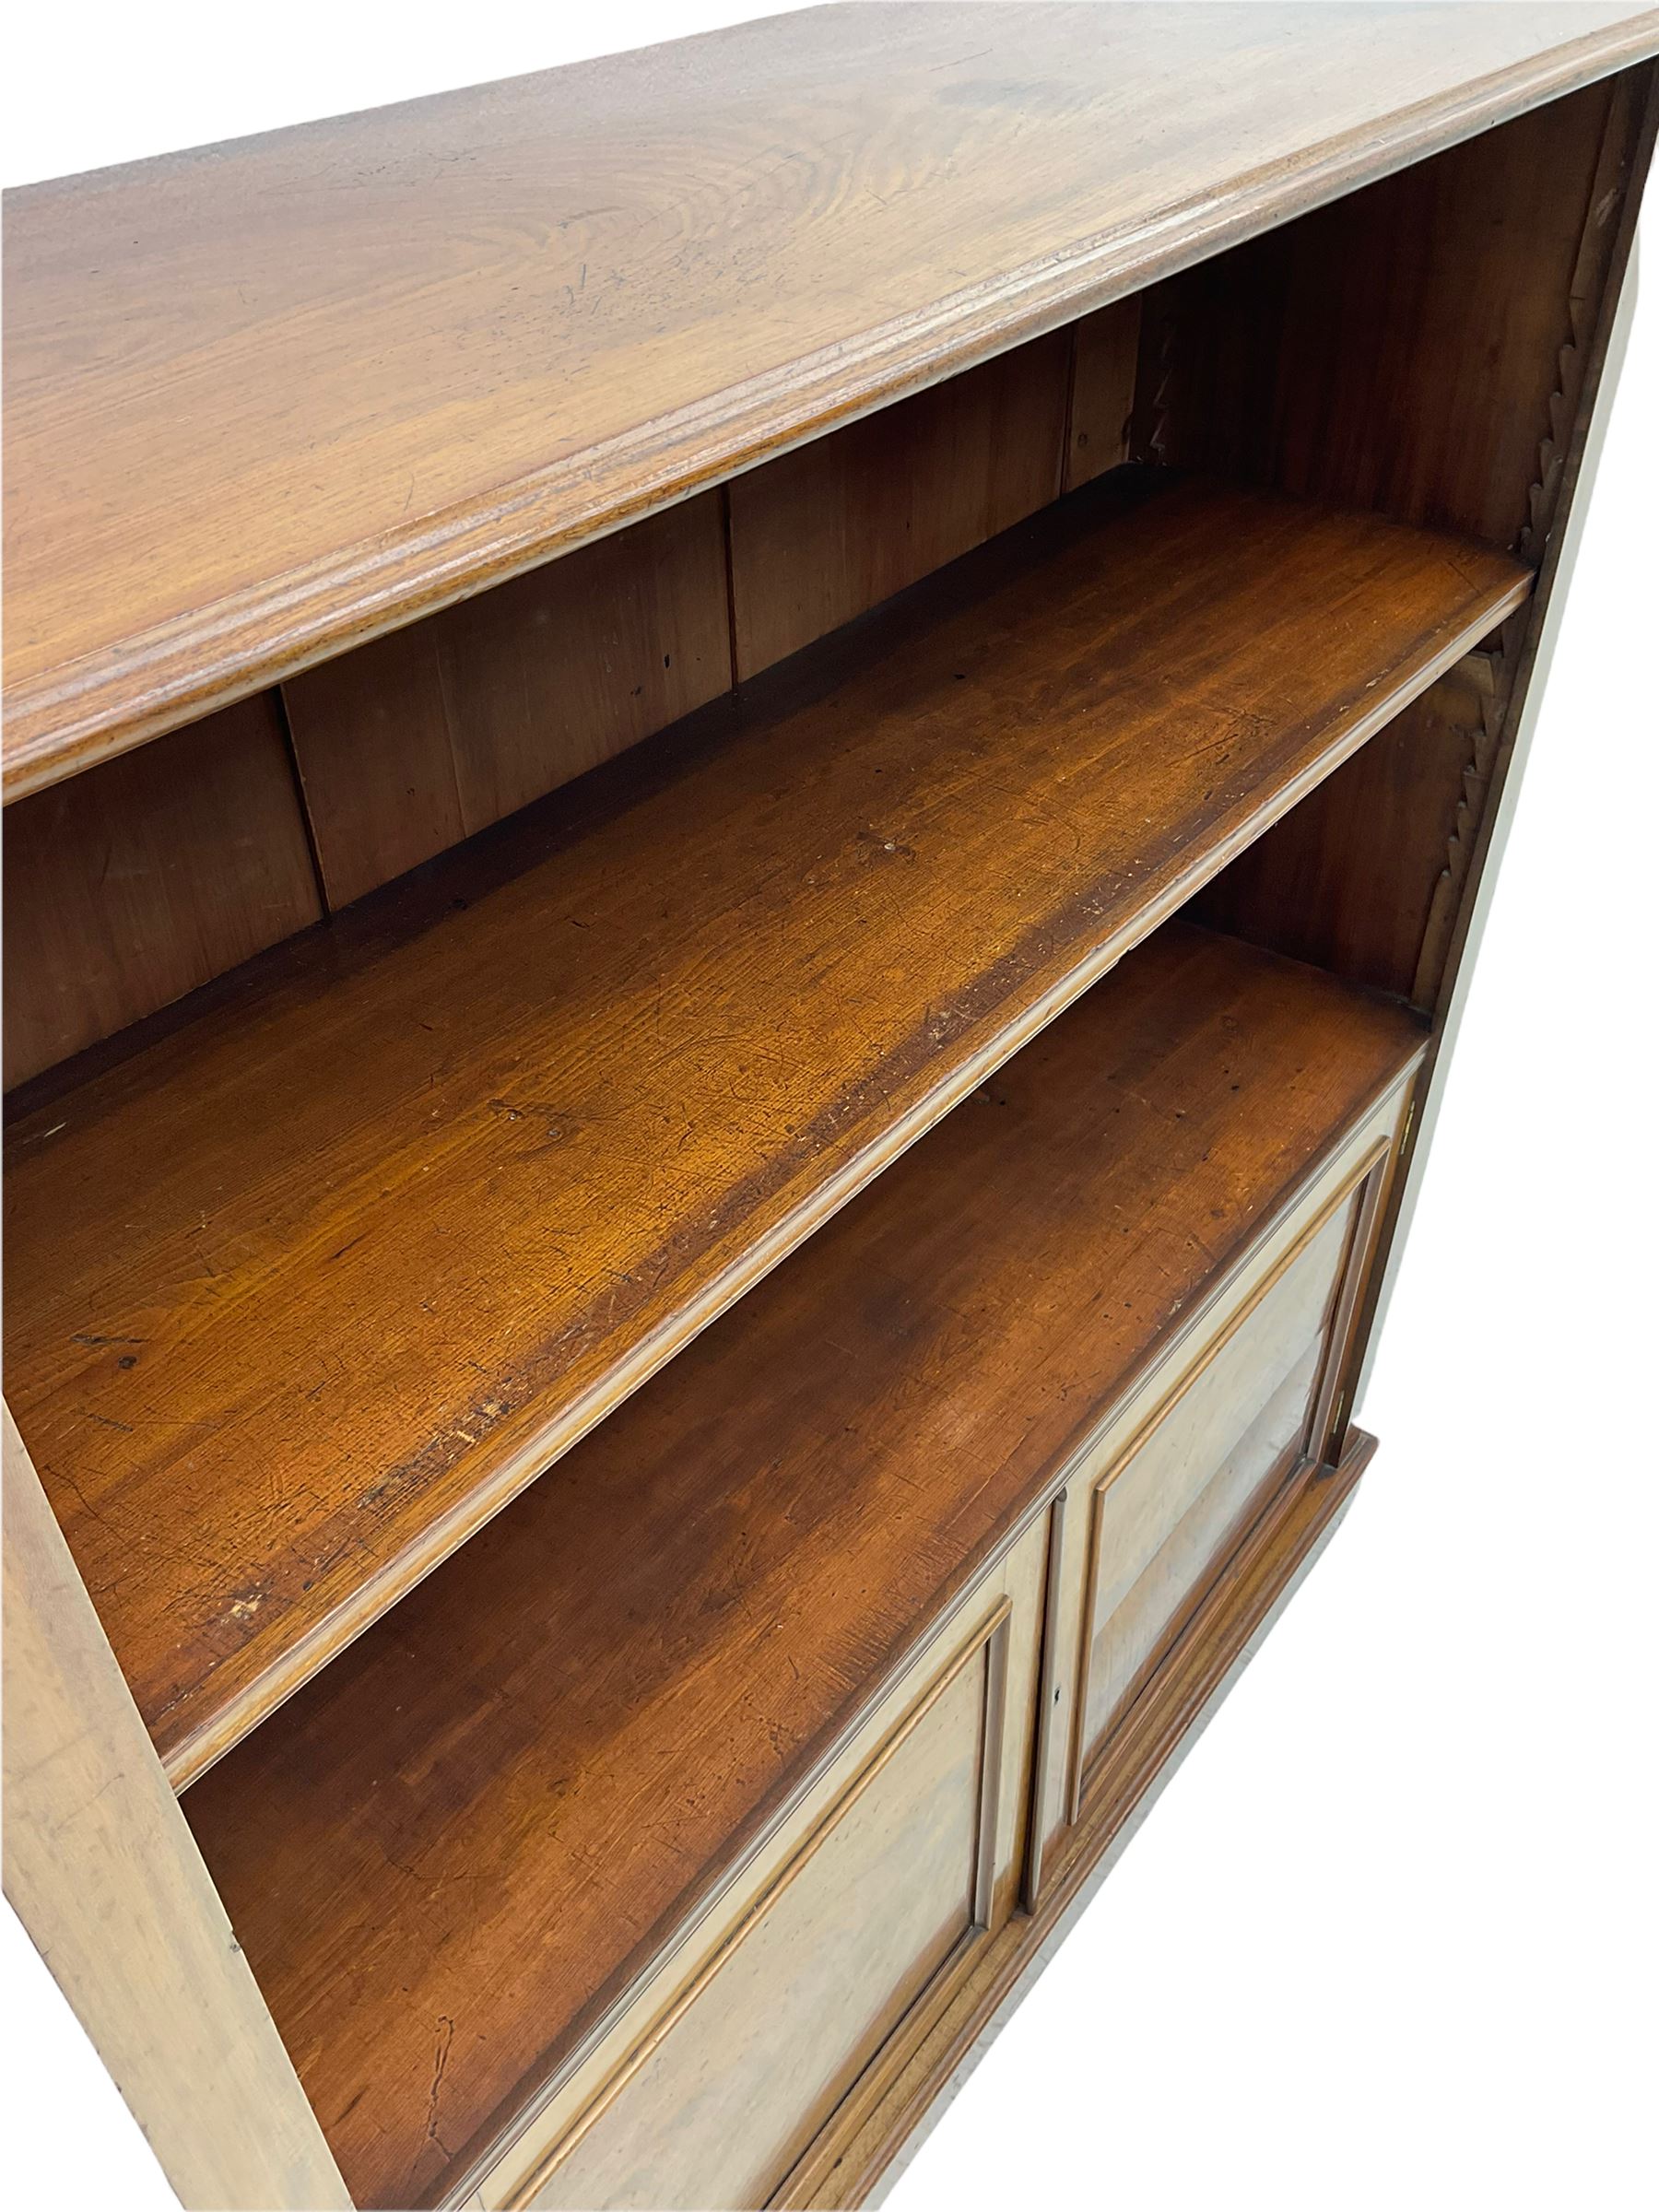 19th century mahogany open bookcase - Image 5 of 6